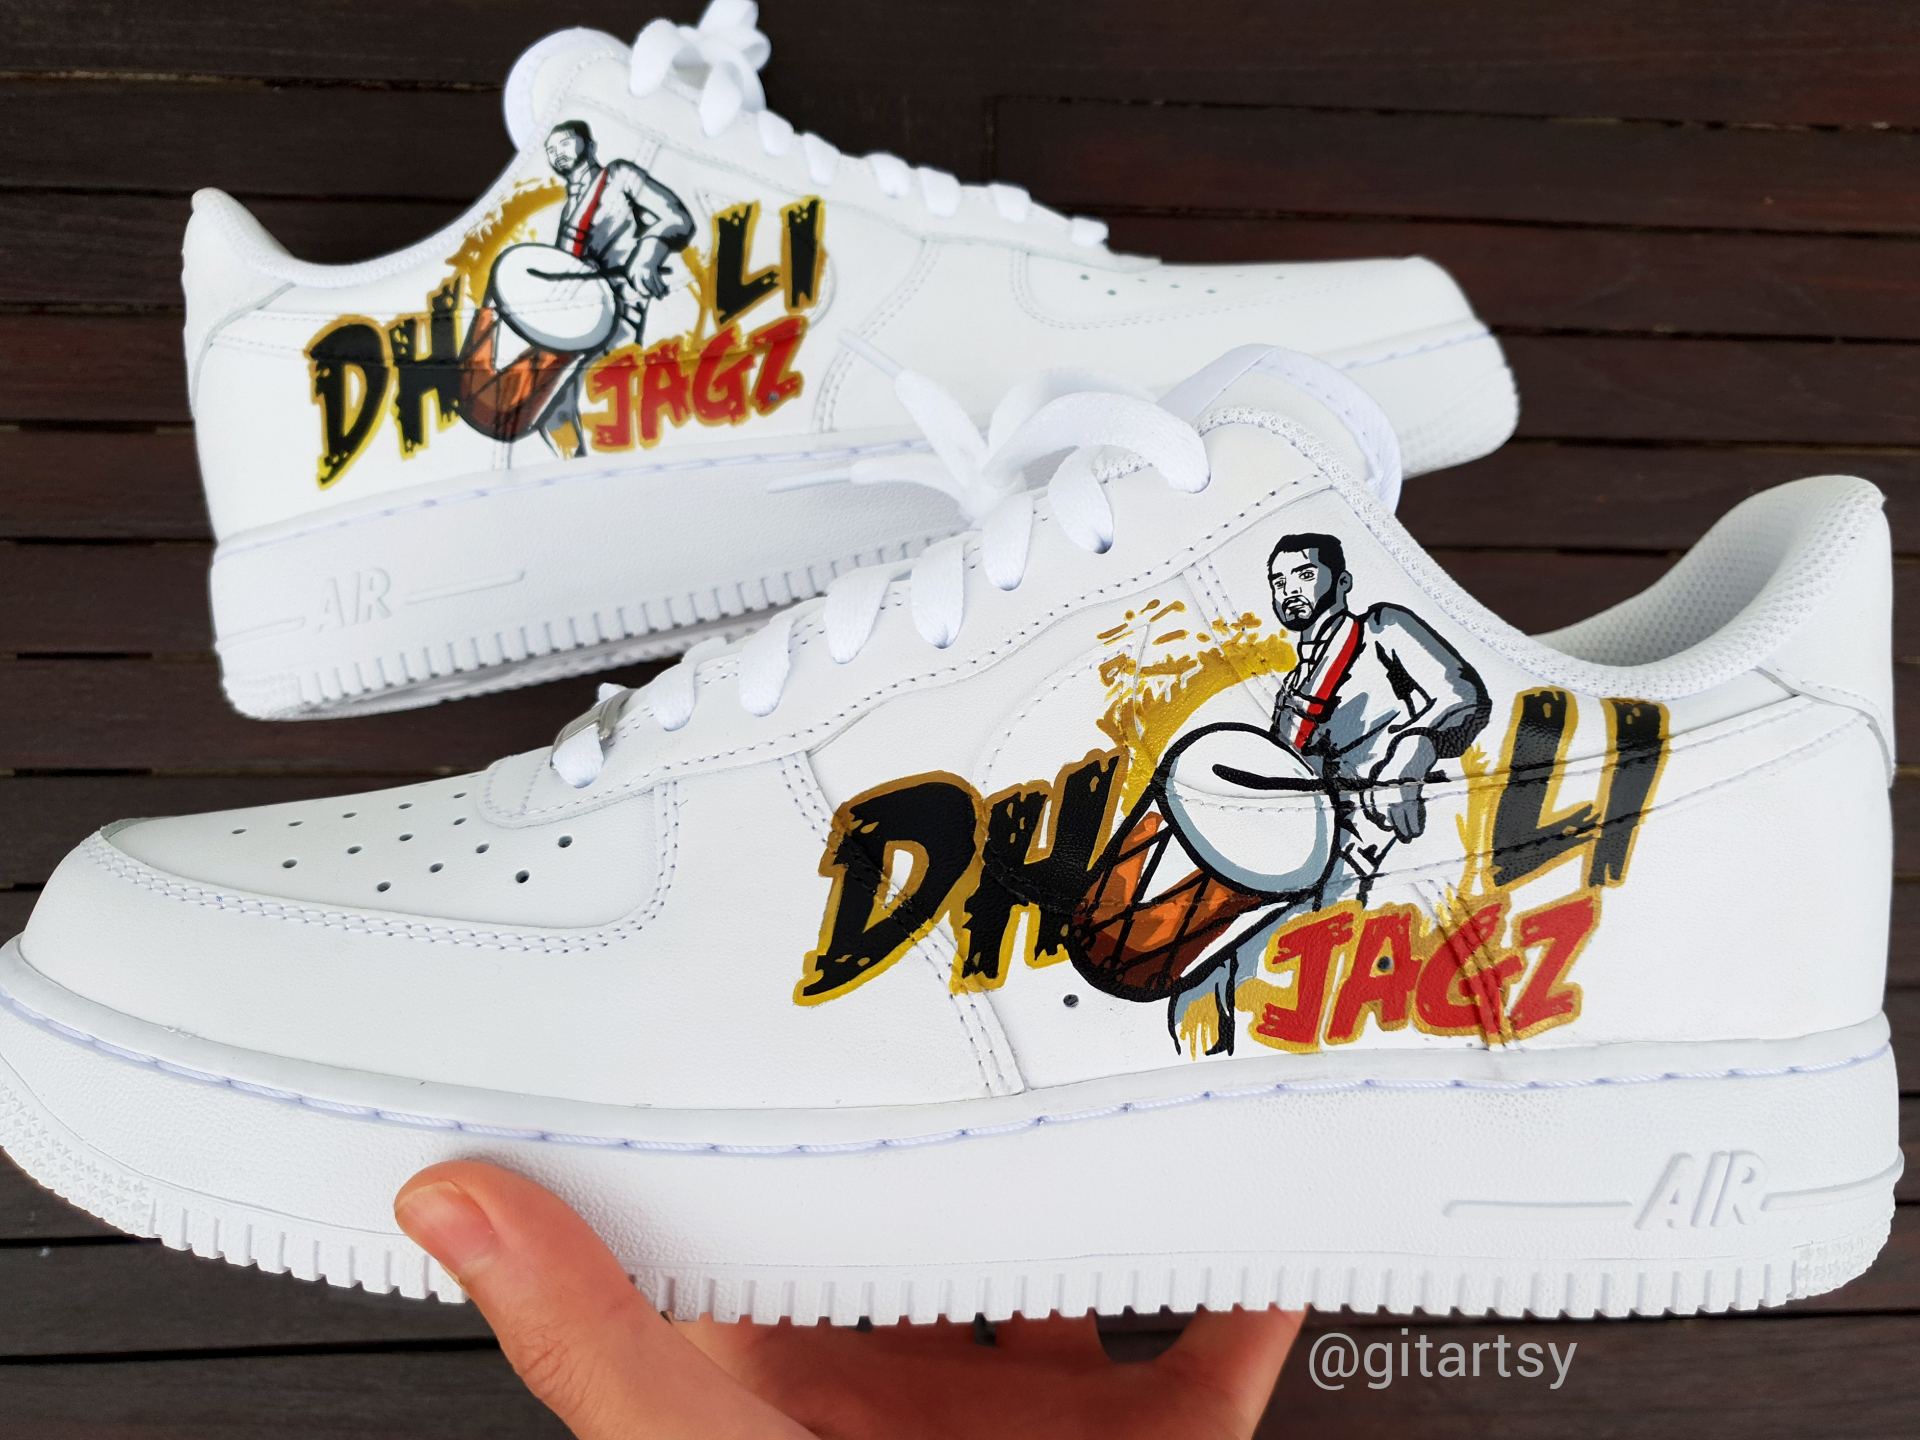 Custom Nike AF1s painted for a dhol player : "Dholi Jagz"